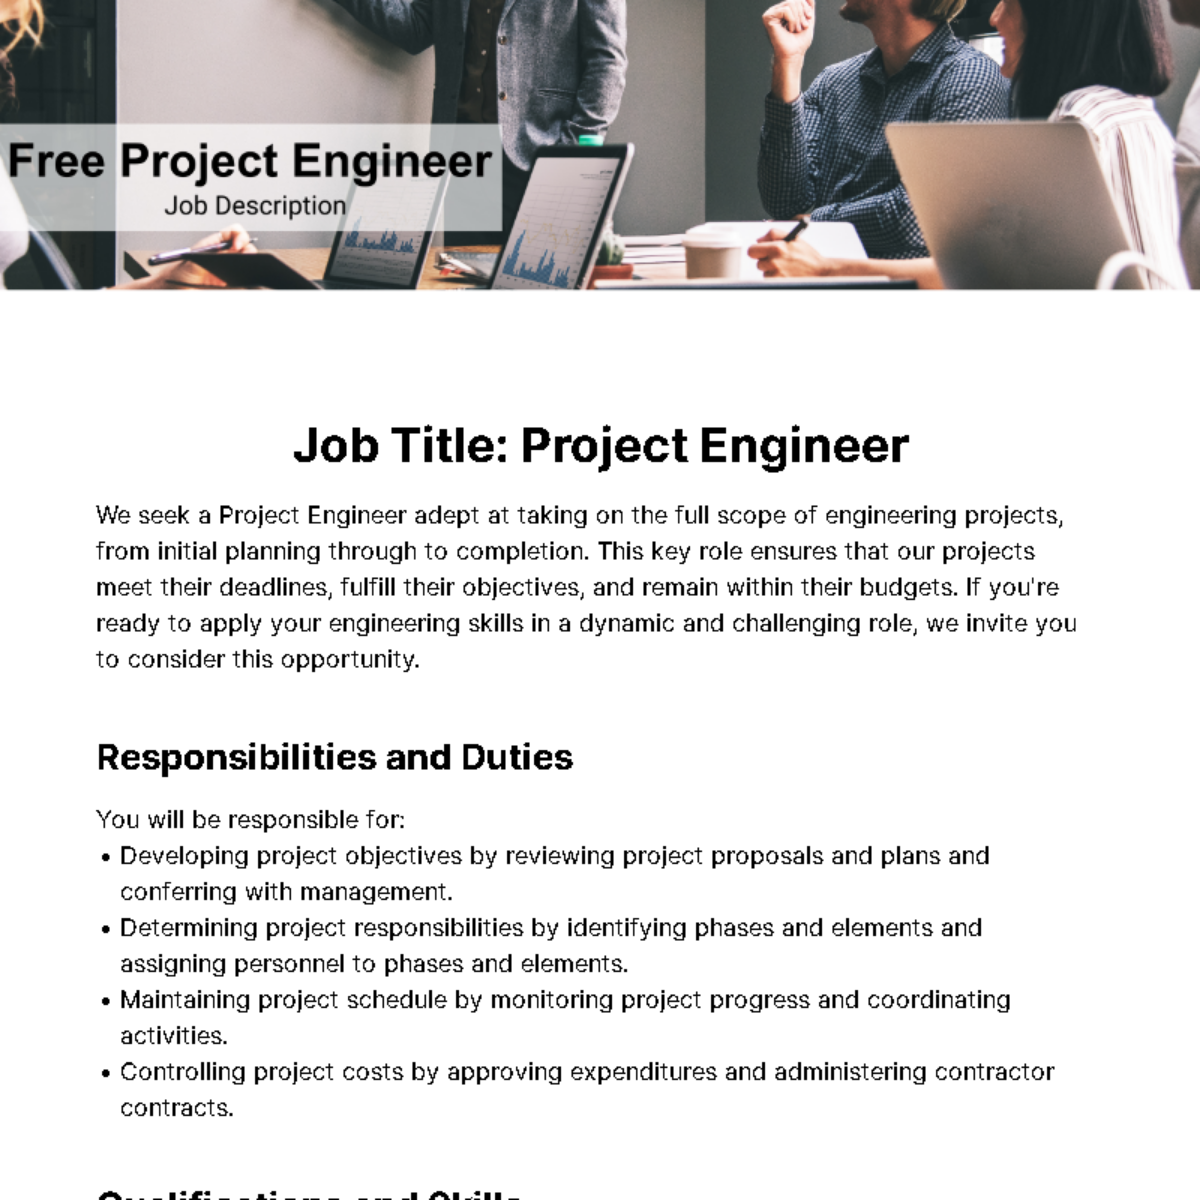 Free Project Engineer Job Description Template